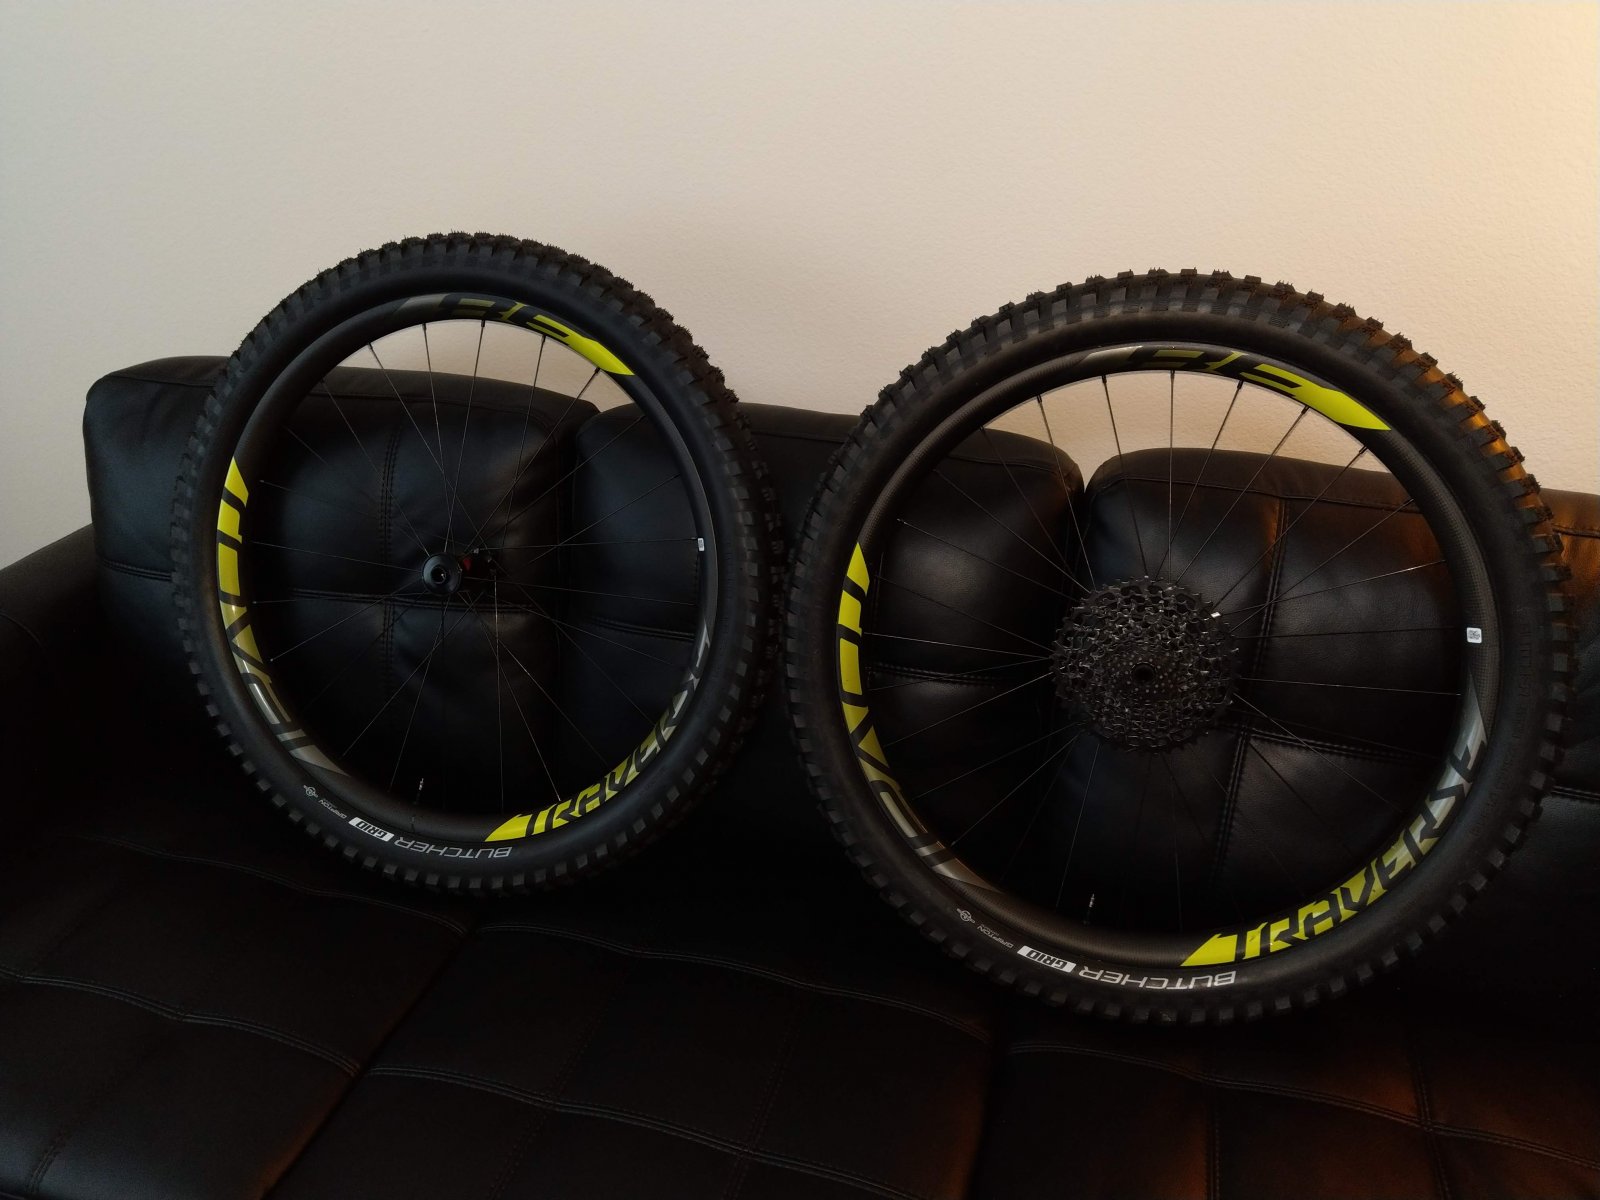 roval 650b wheels